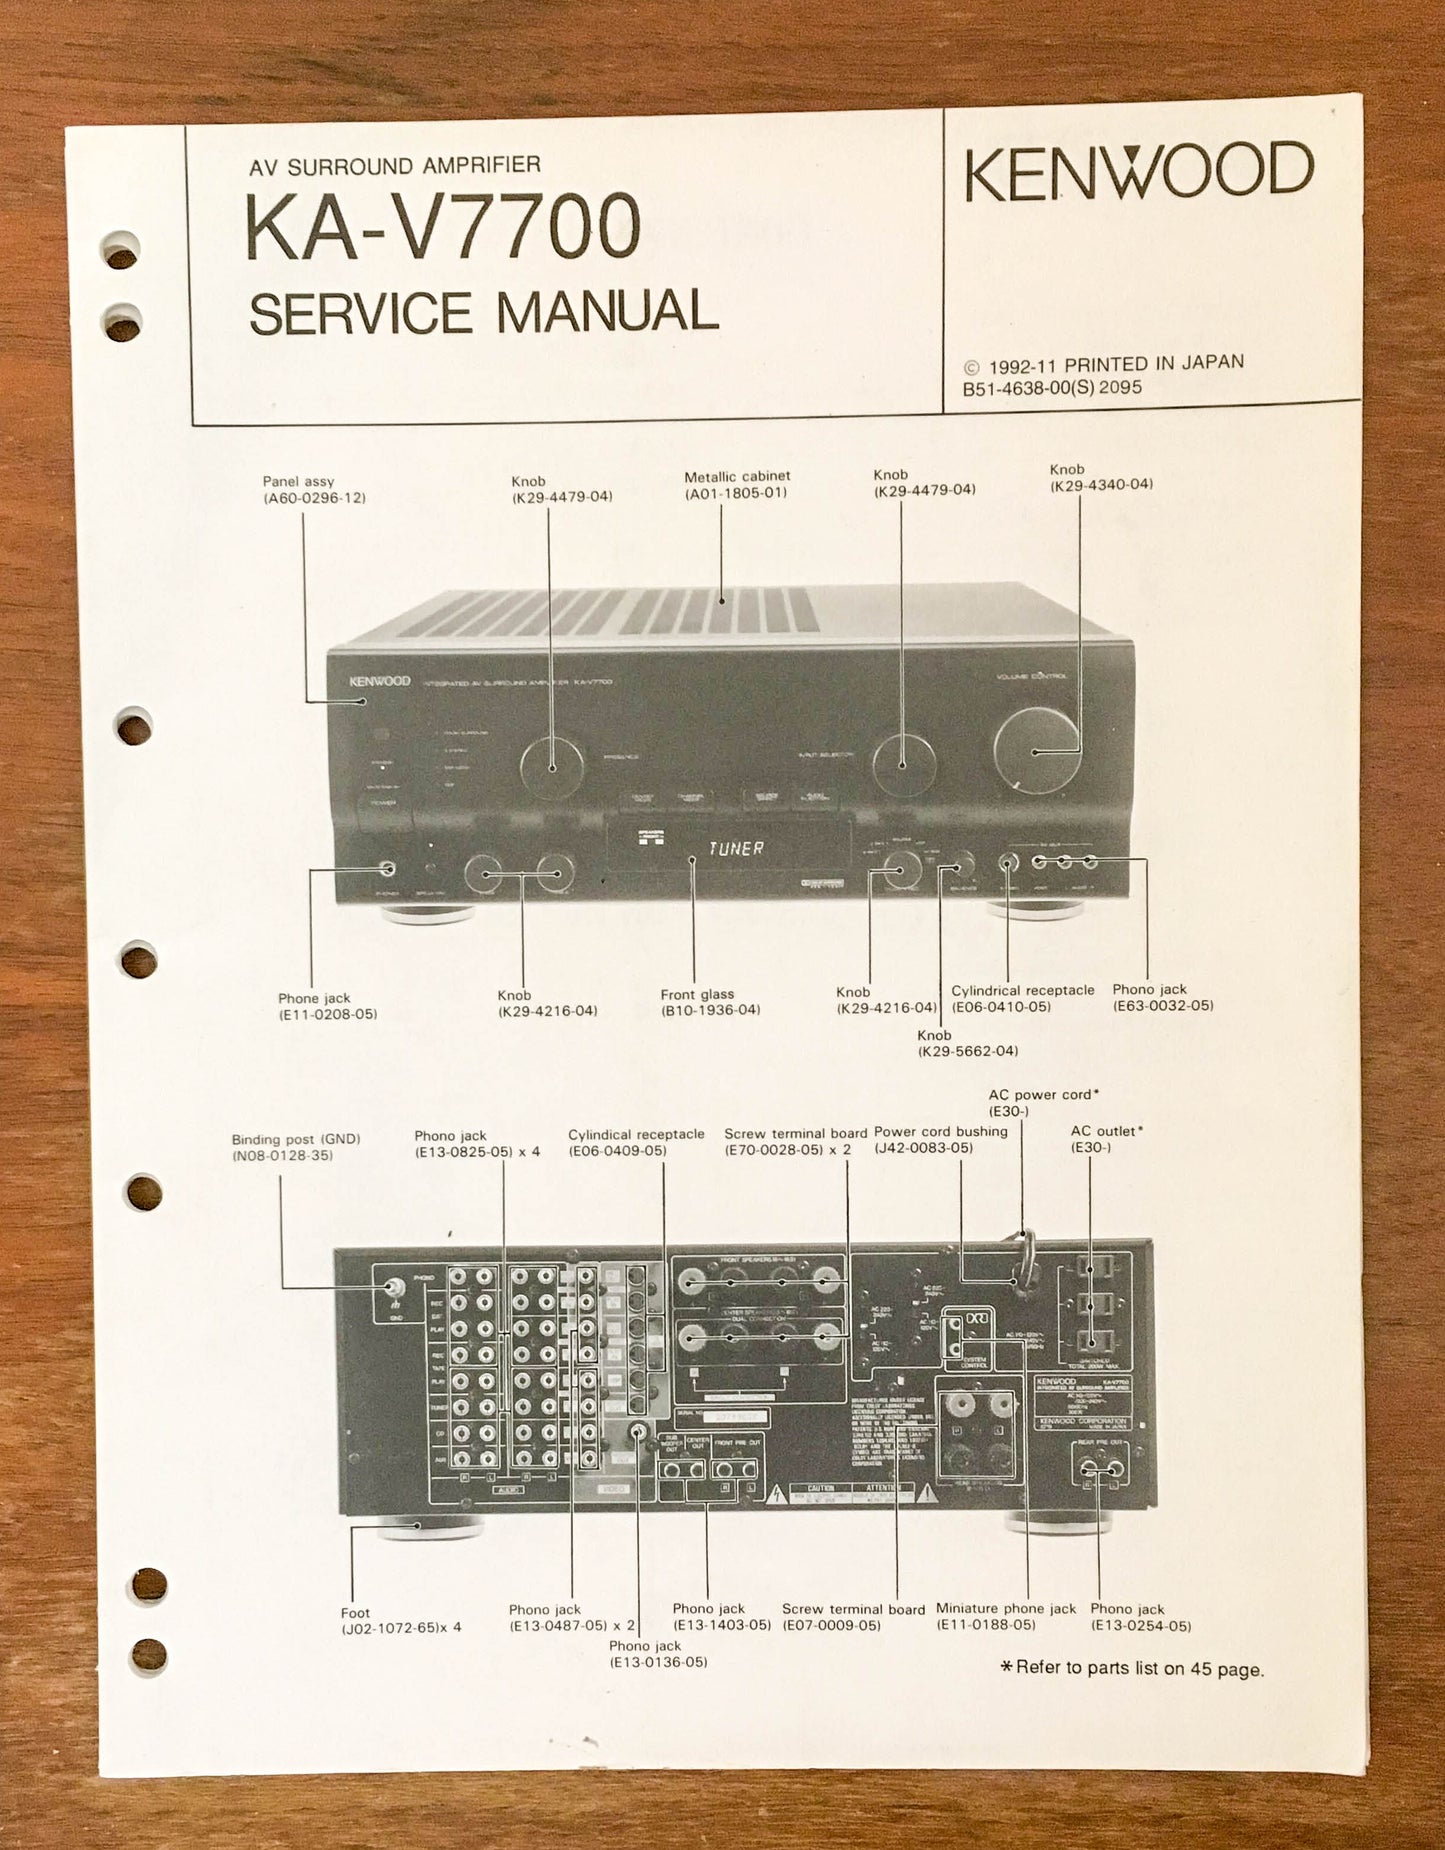 Kenwood KA-V7700 Stereo Amplifier Service Manual *Original*